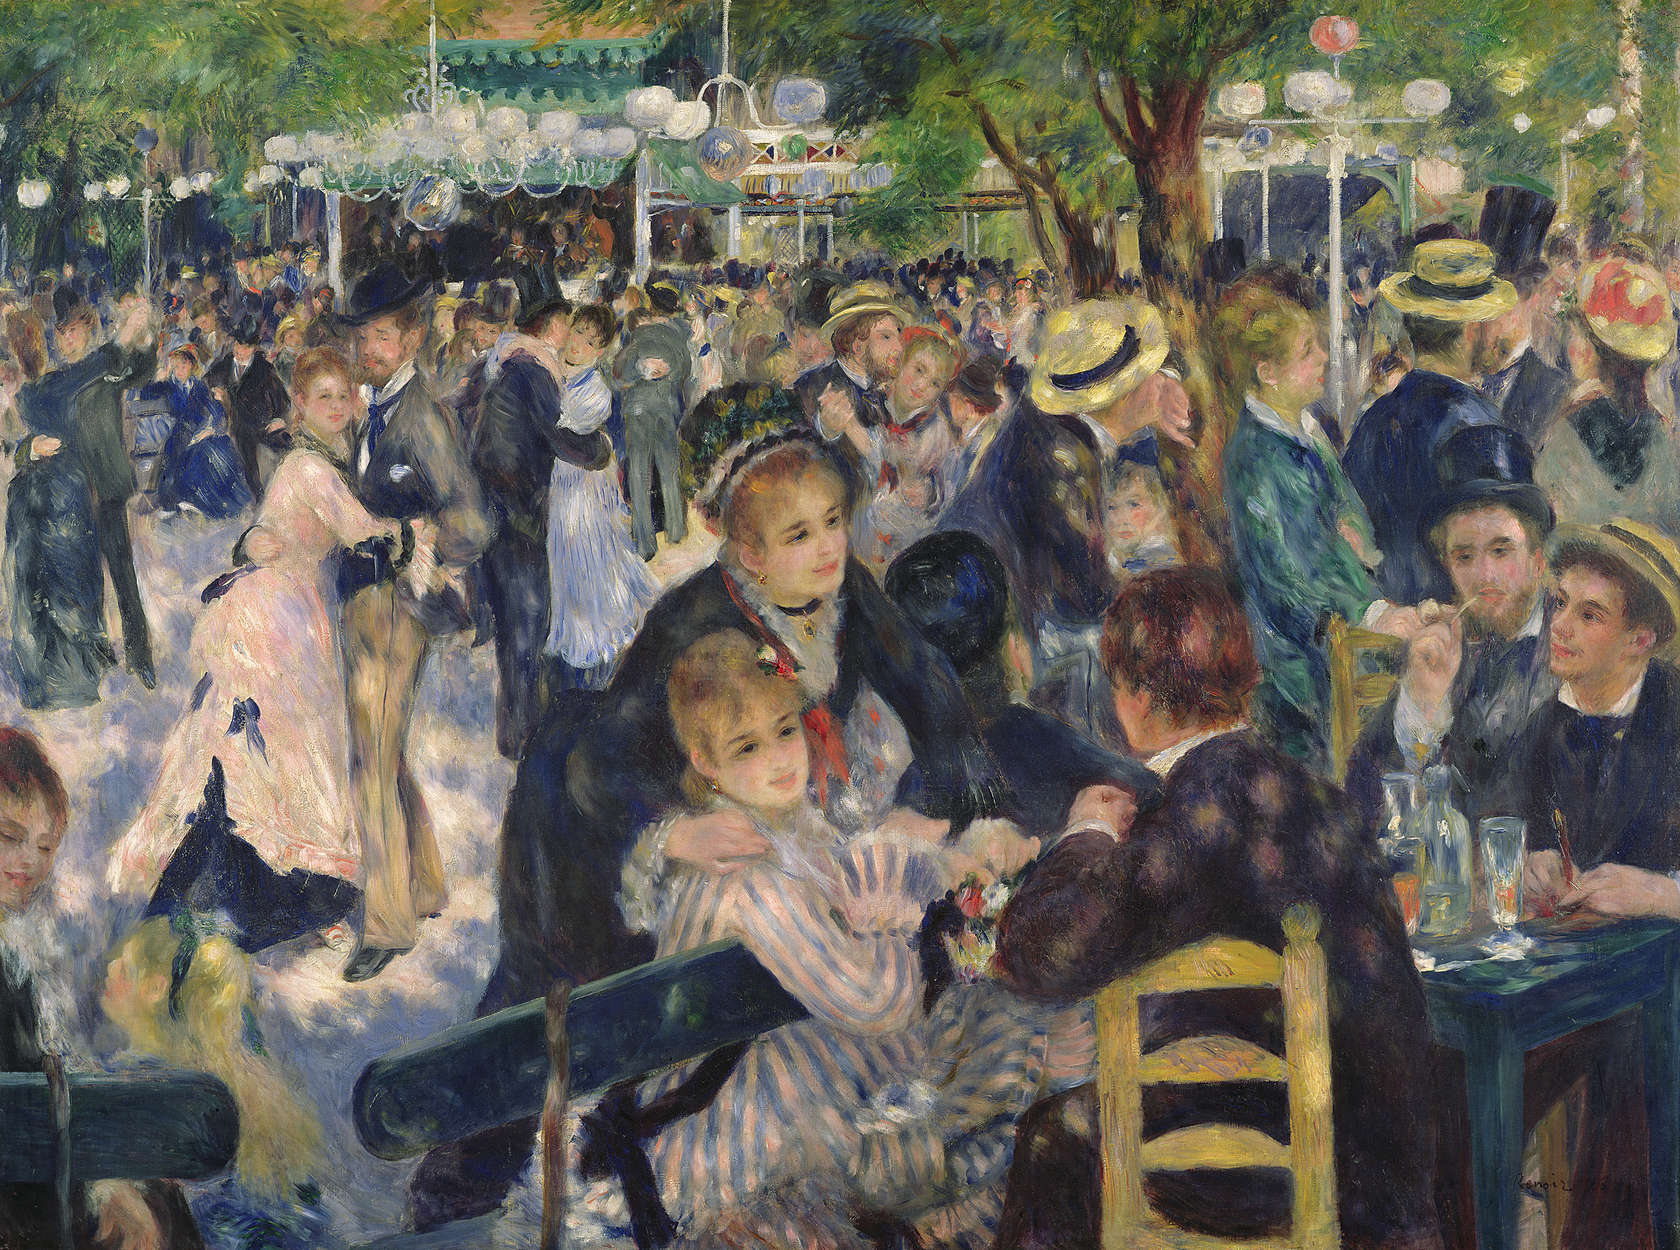             Fotomurali "Ballo al Moulin de la Galette" di Pierre Auguste Renoir
        